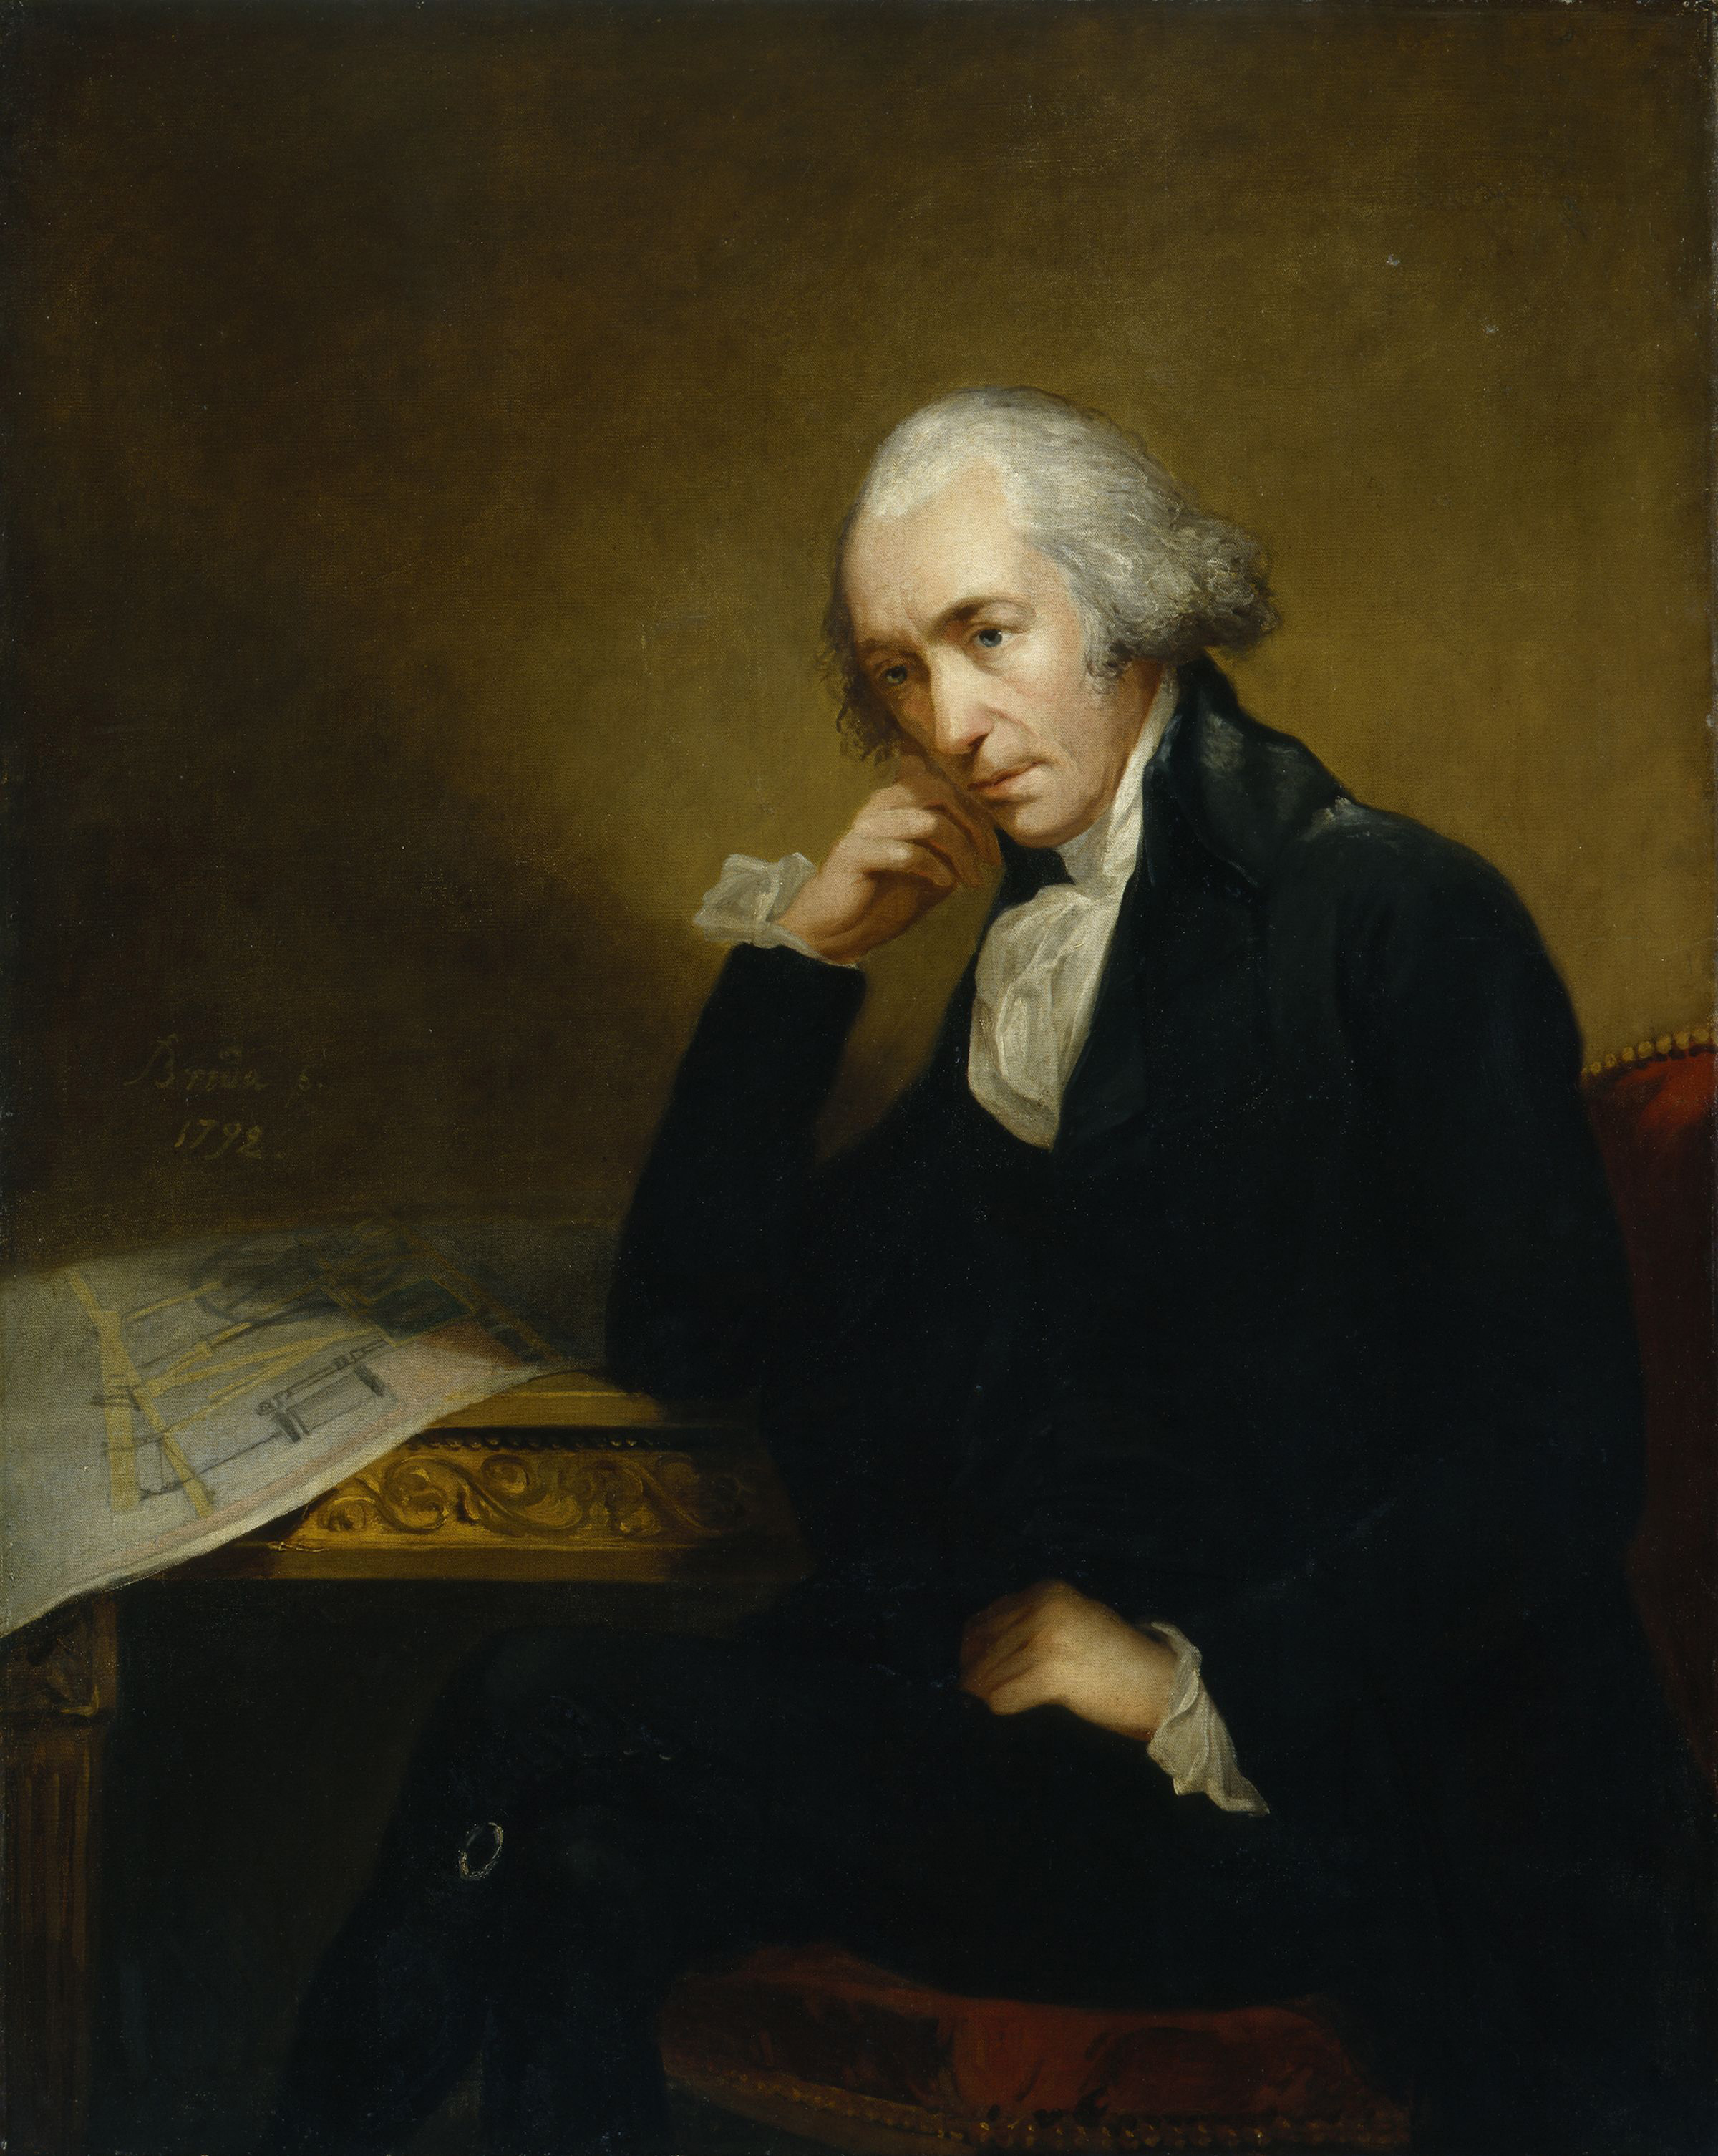 Portrait of James Watt, the noted Scottish inventor and mechanical engineer by Carl Frederik von Breda. 